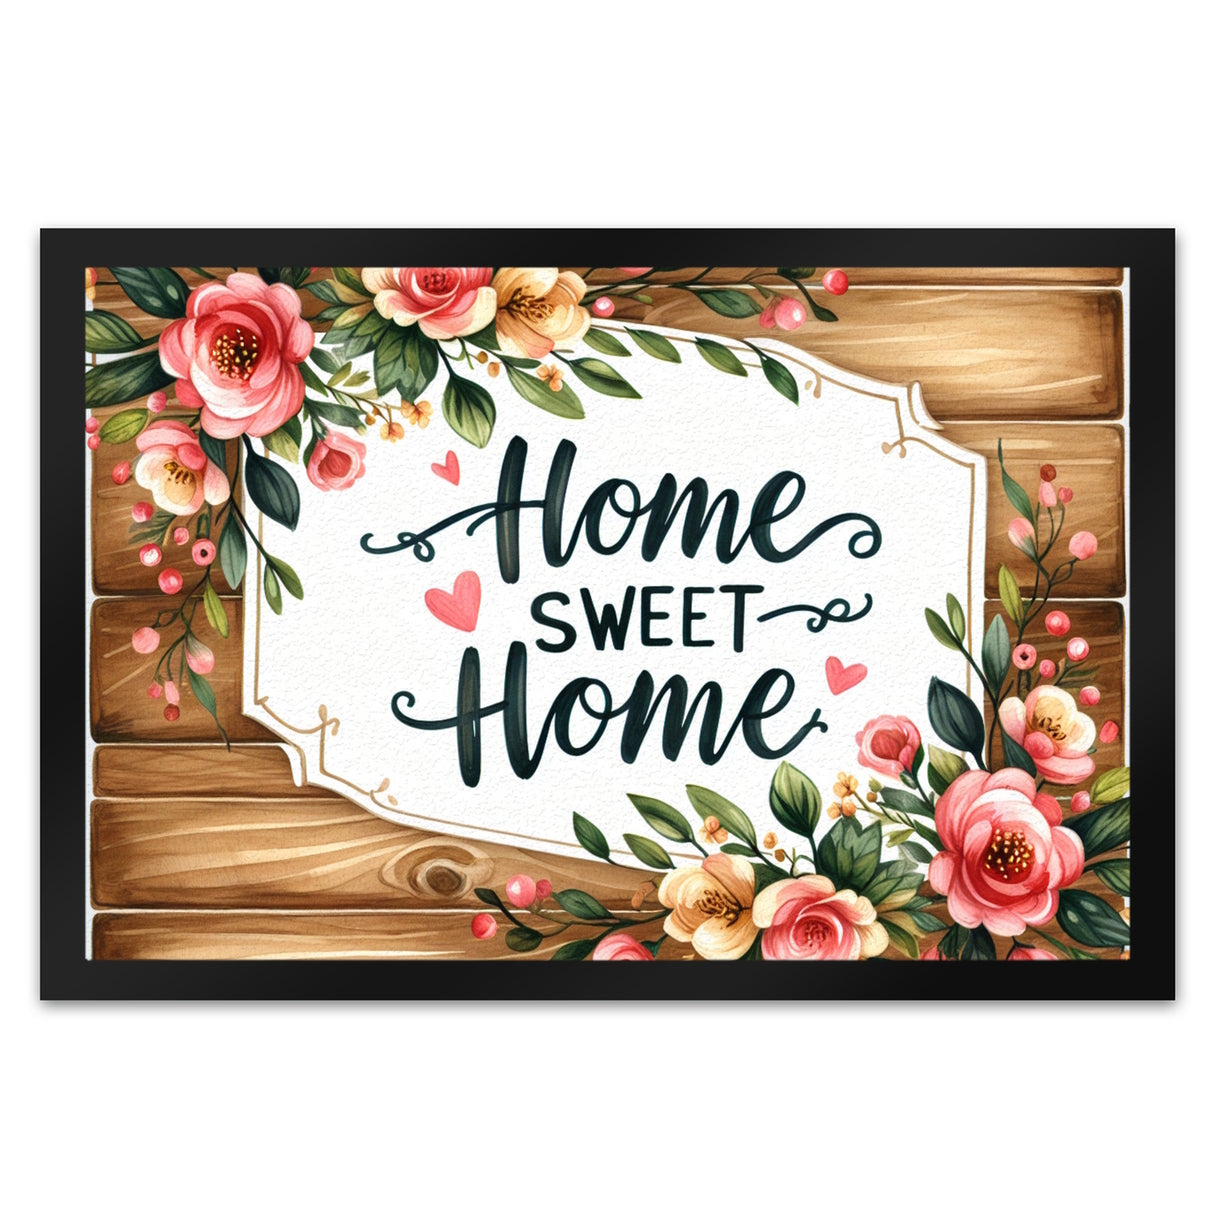 Home sweet Home Fußmatte in 35x50 cm